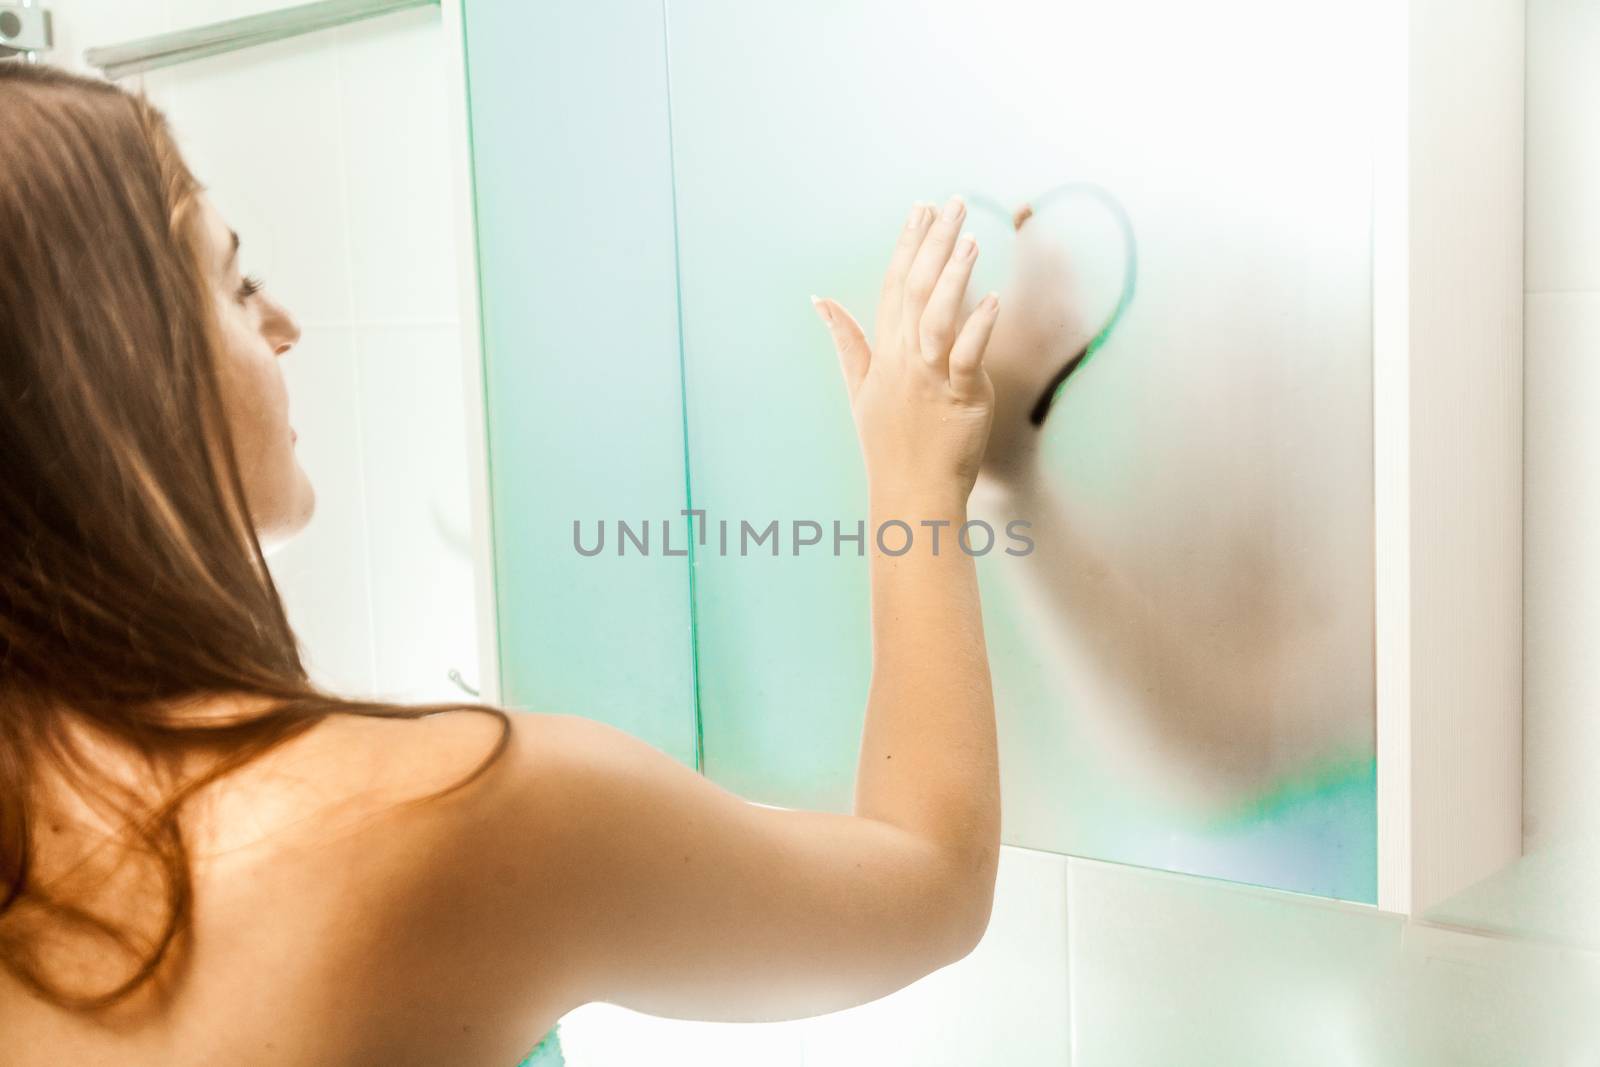 nude woman drawing heart on steamy mirror by Kryzhov